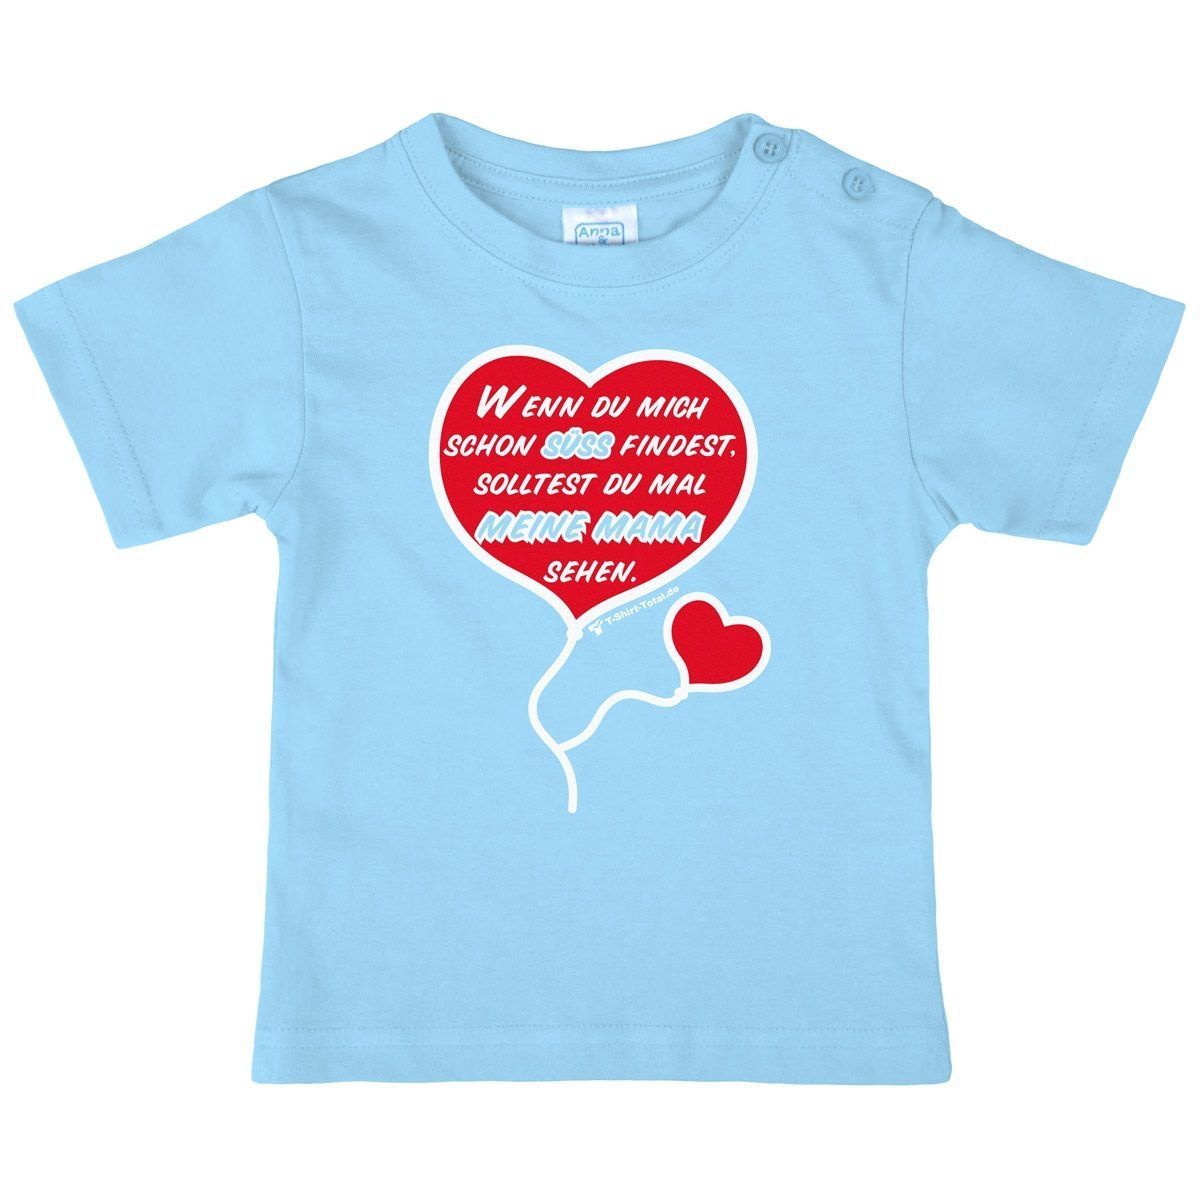 Süß finden Kinder T-Shirt hellblau 98